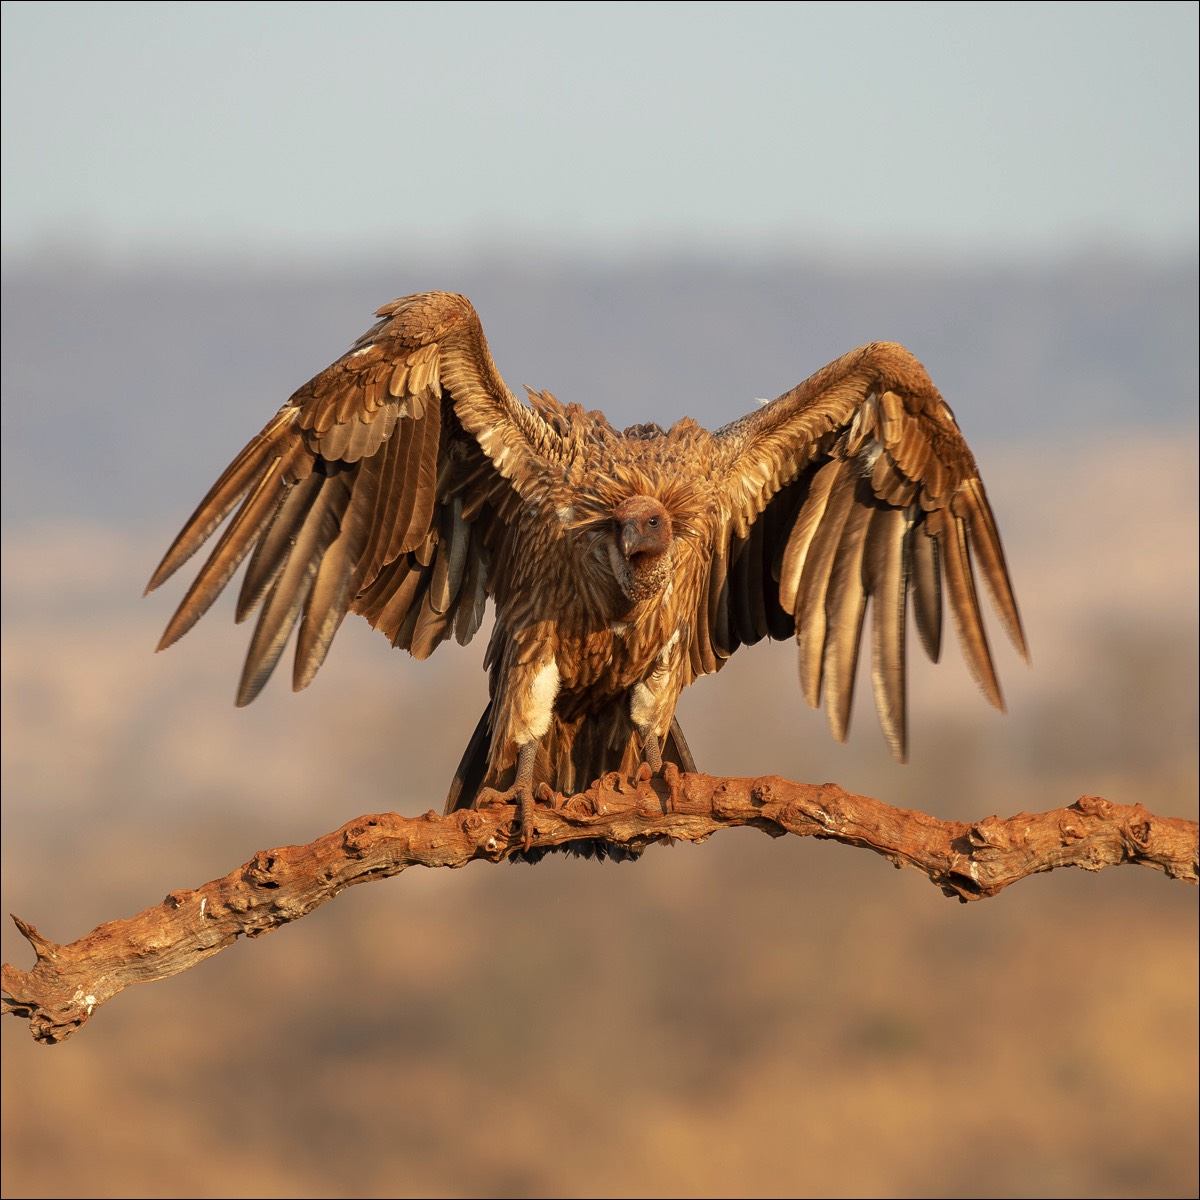 Whitebacked Vulture (Witruggier)